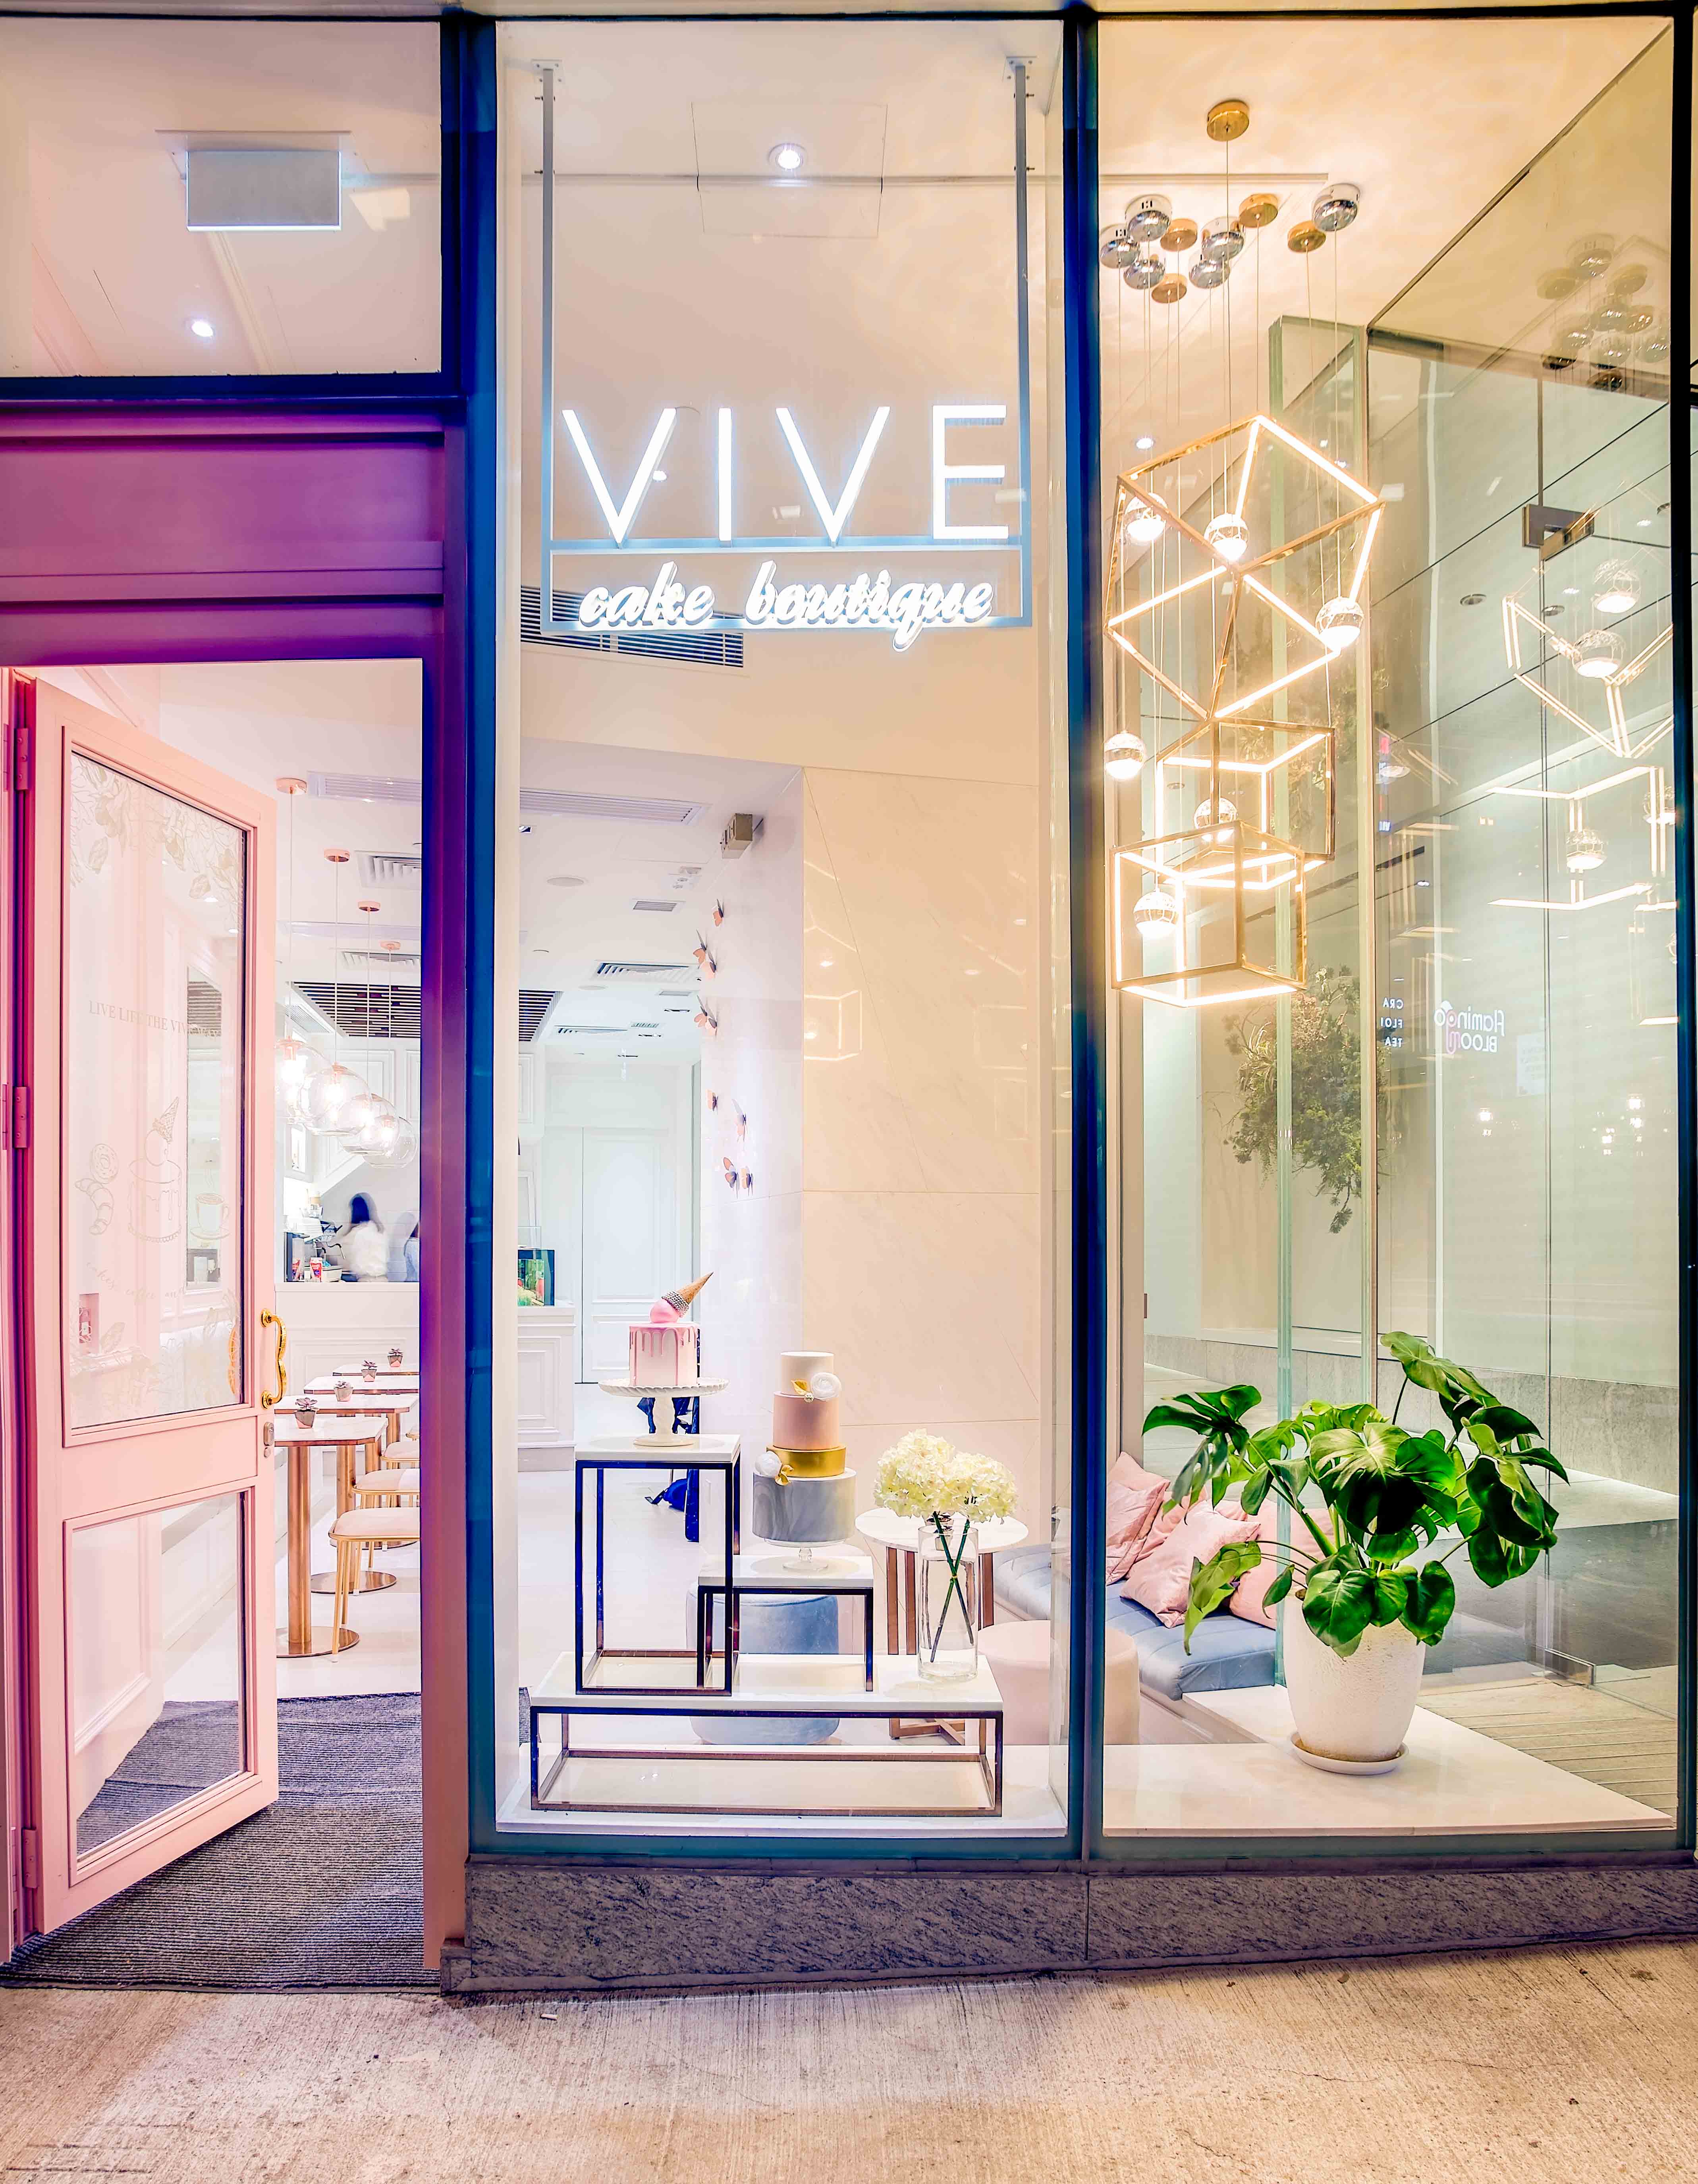 Photo: Vive Cake Boutique, Central location.